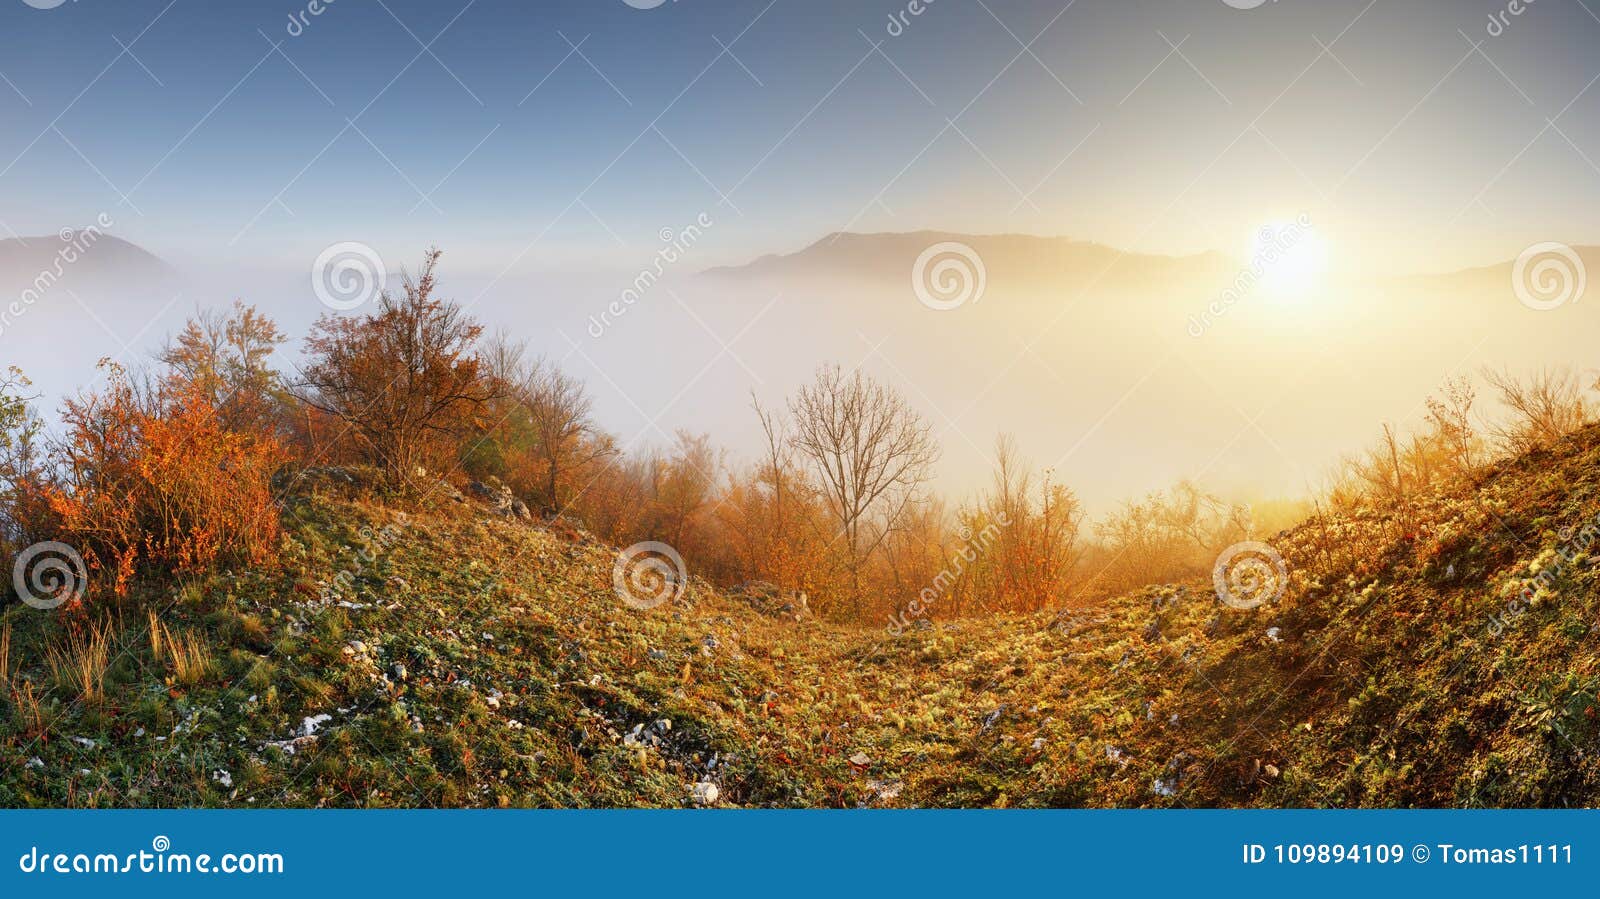 sun over clouds mist in mountain landcape at sunrise